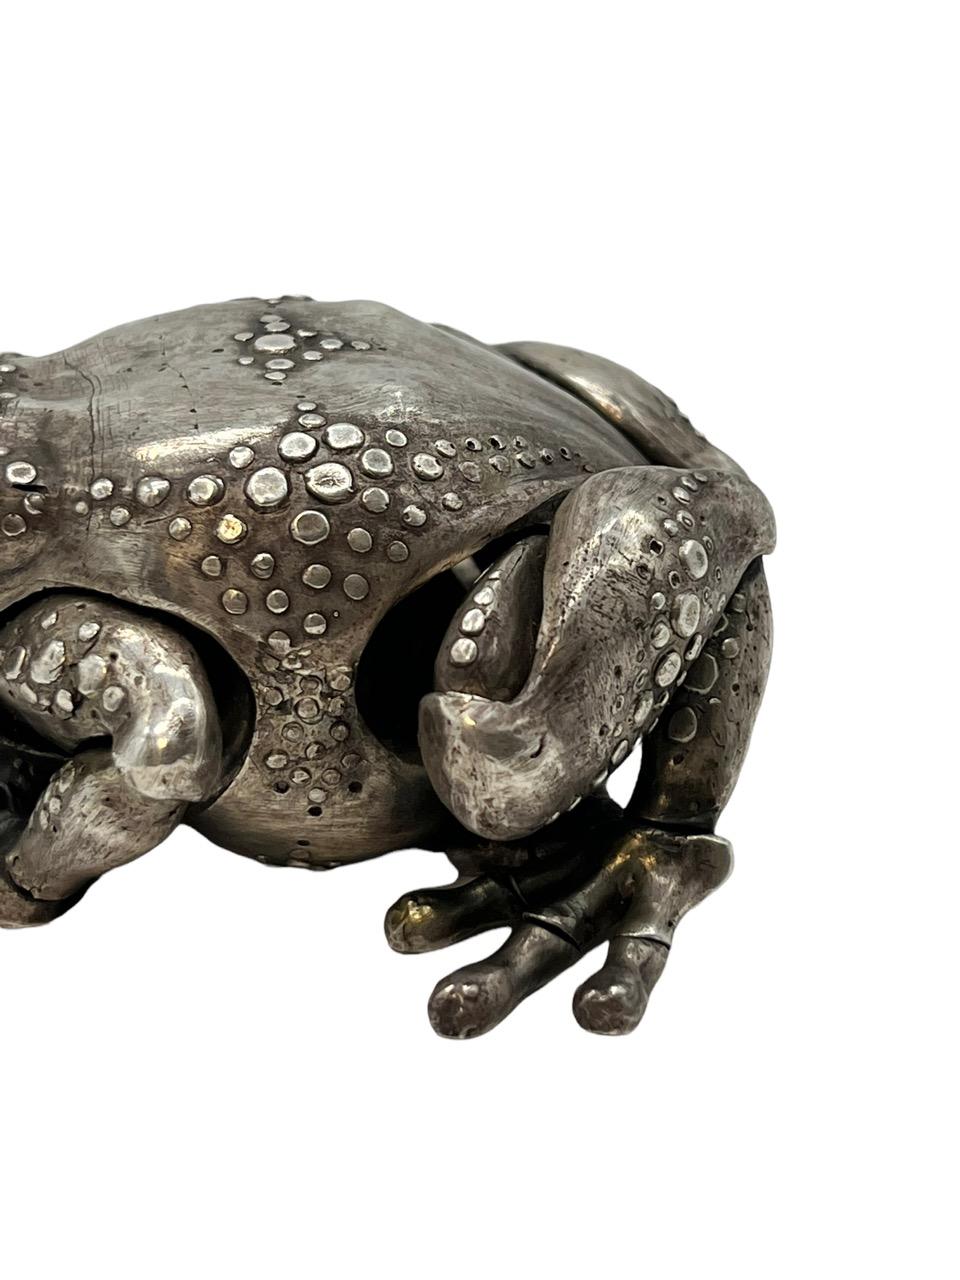 Oleg Konstantinov Fully Articulated Frog Made of Sterling Silver 4